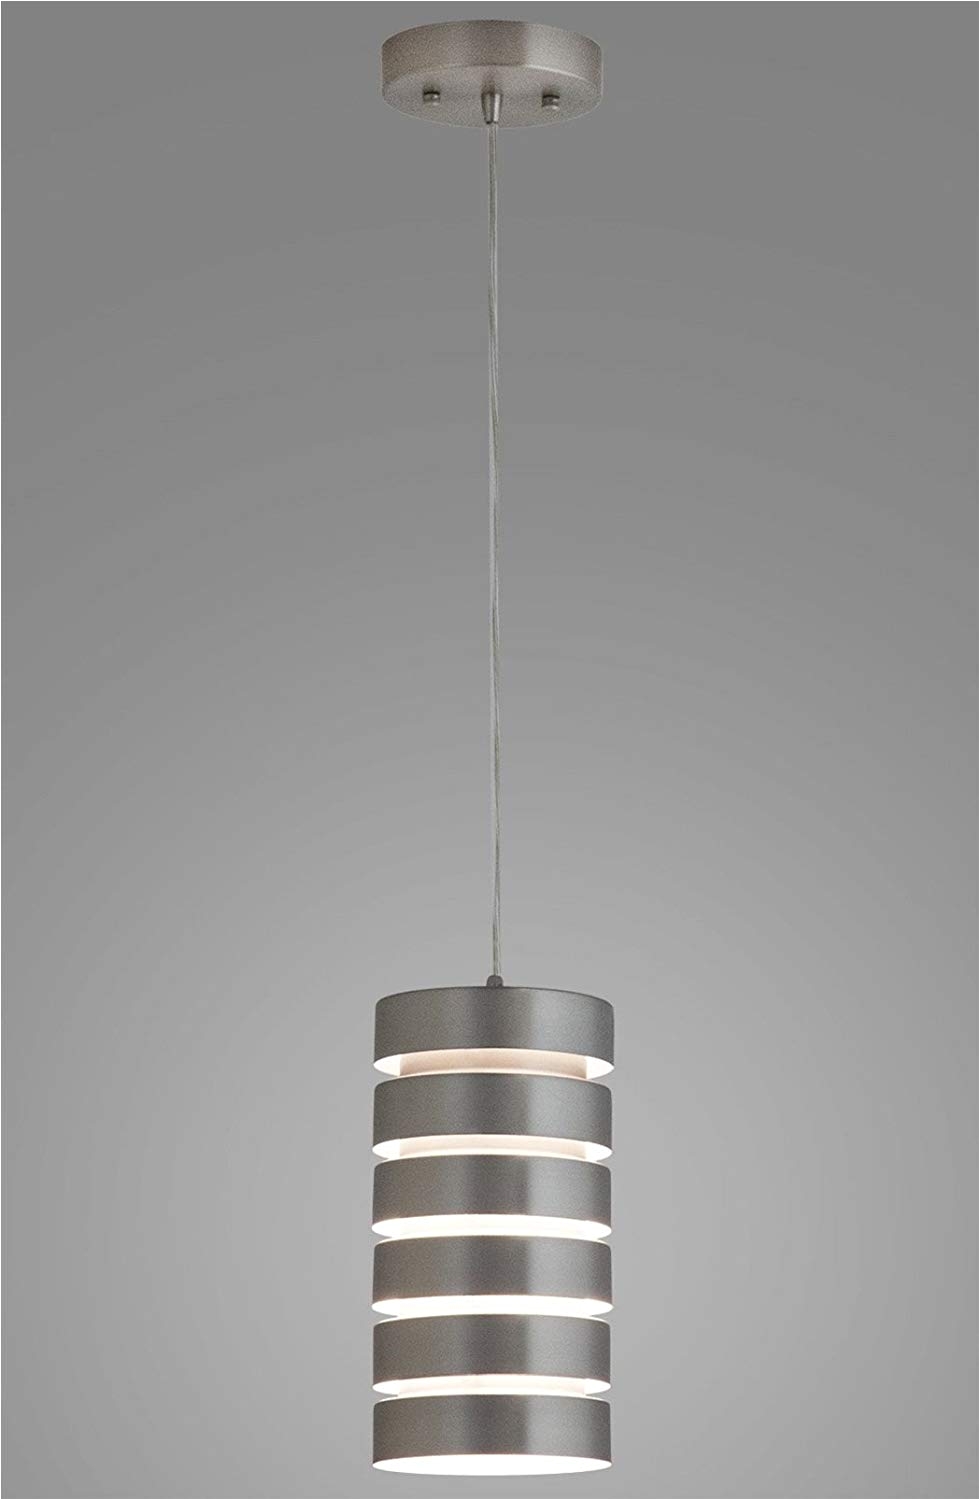 macchione modern hanging pendant light brushed nickel steel linea di liara ll p518 amazon com